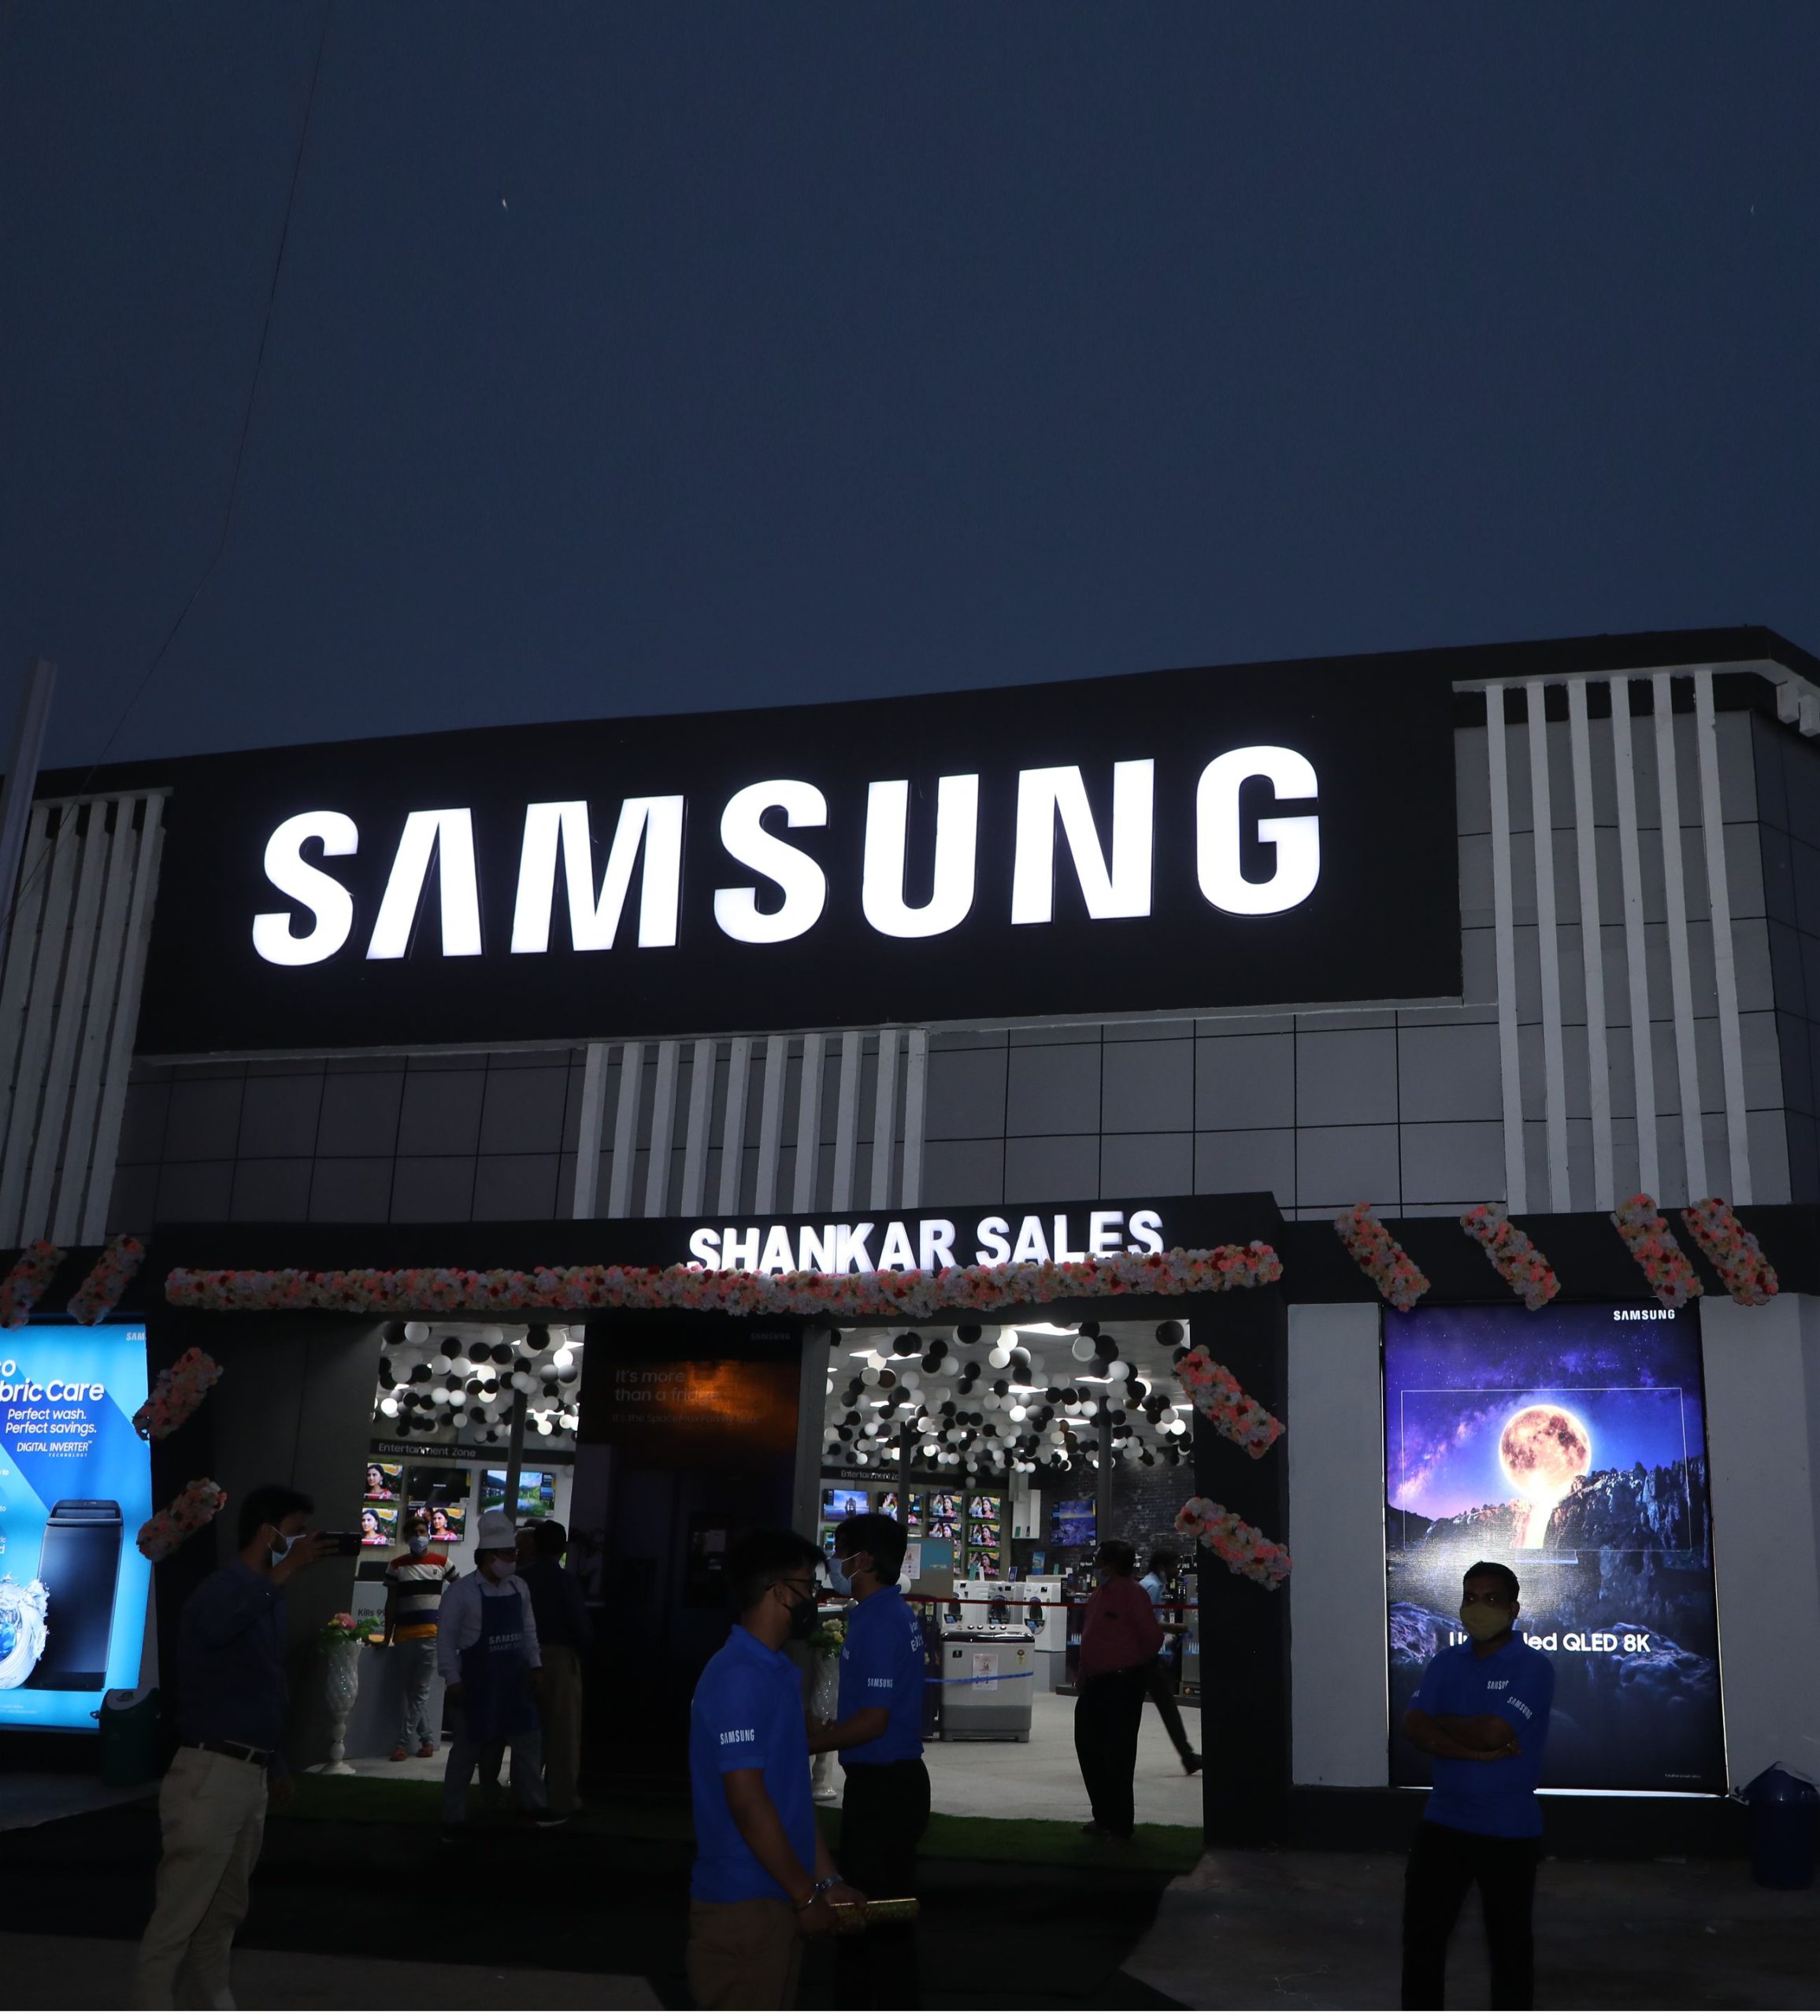 Samsung -Shankar Sales Case study img